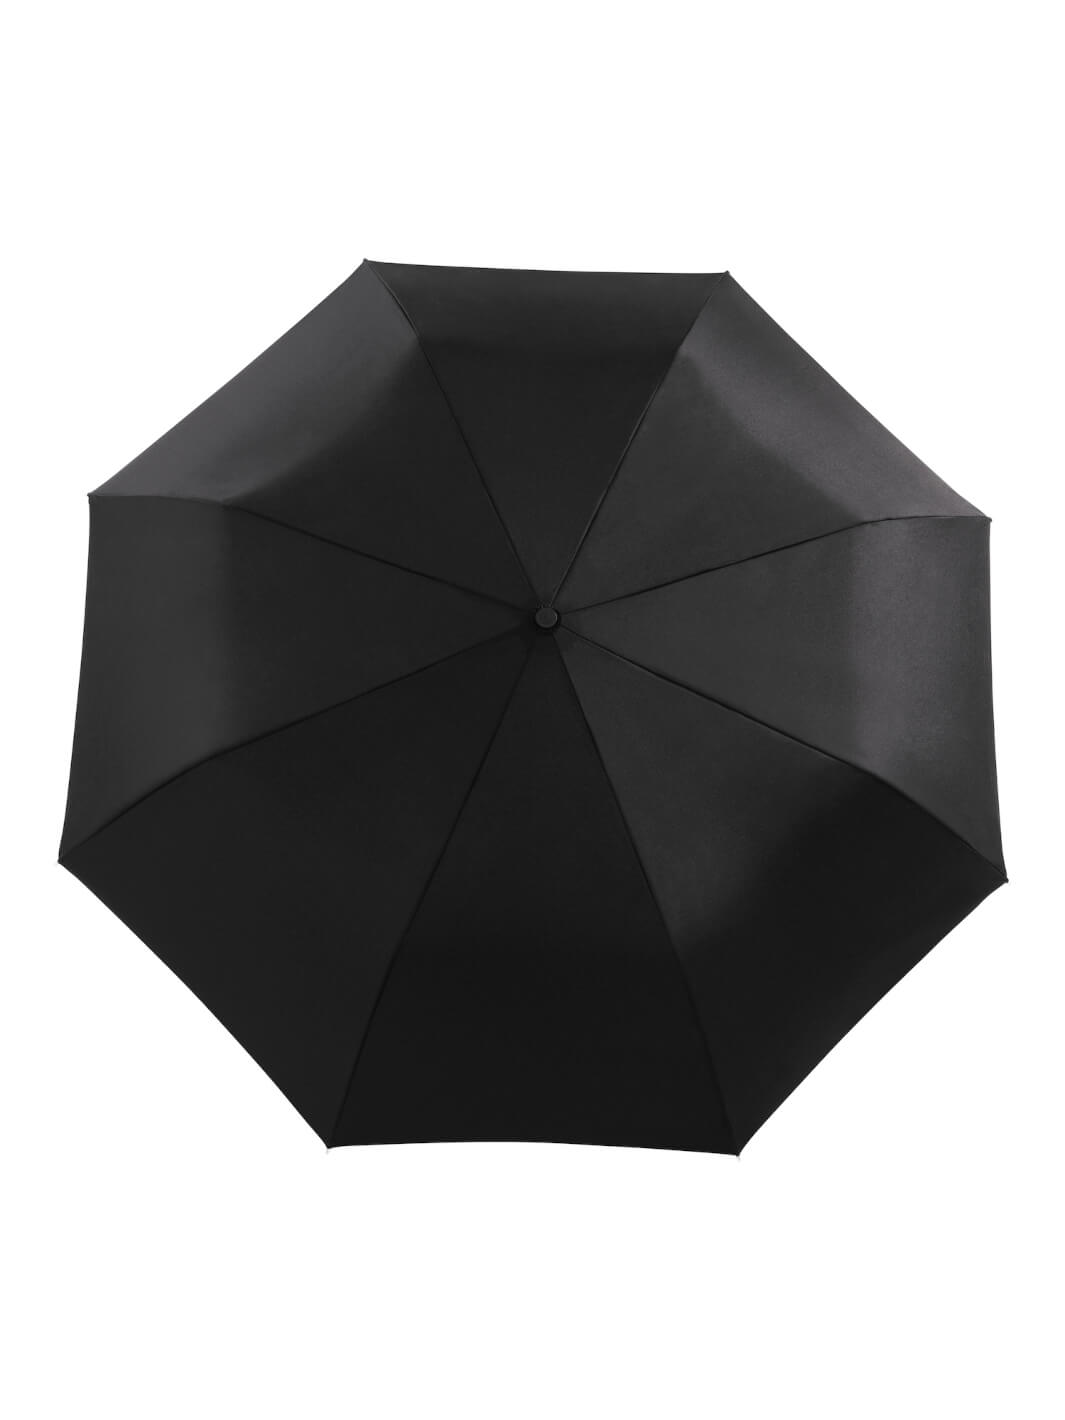 Handgefertigter kompakter Regenschirm